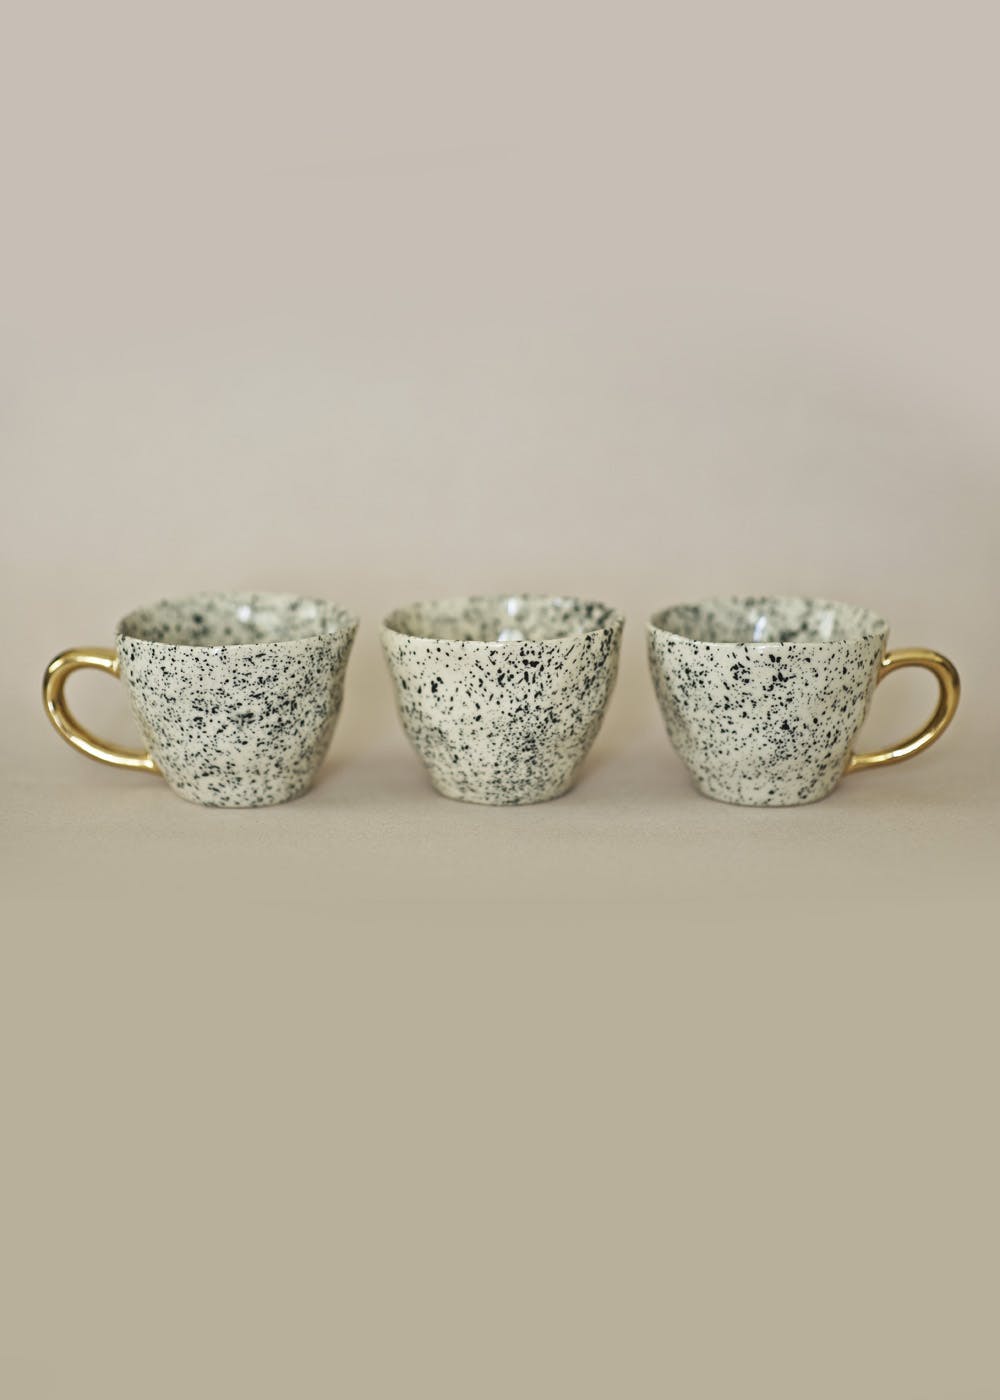 Speckled Tea Cups (Set of 2)